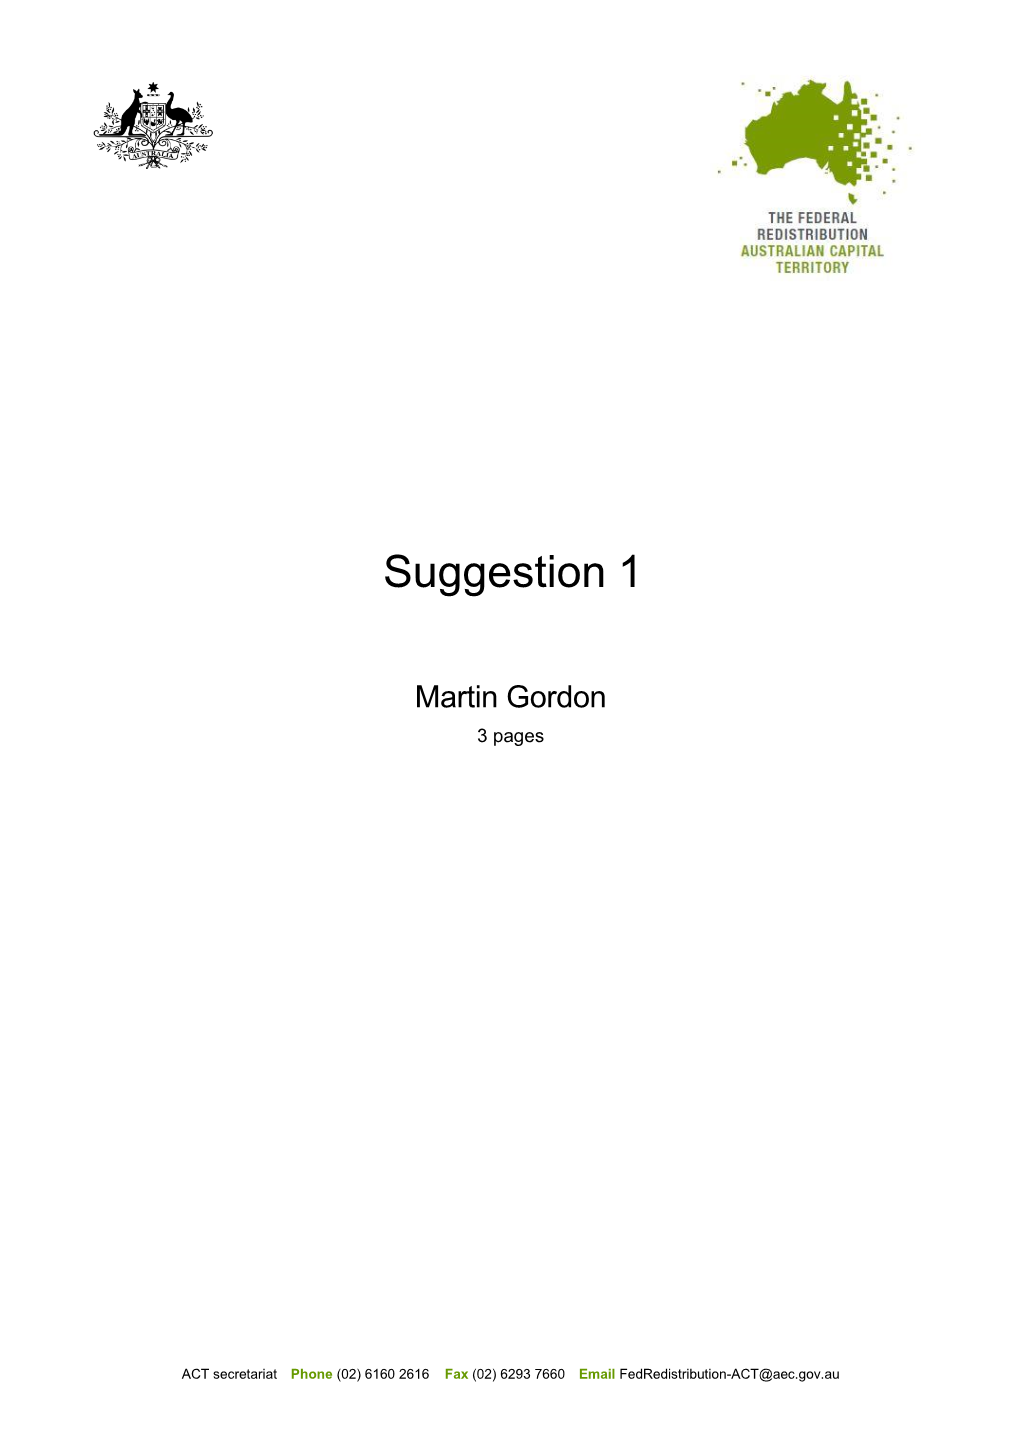 Suggestion 1 -Martin Gordon